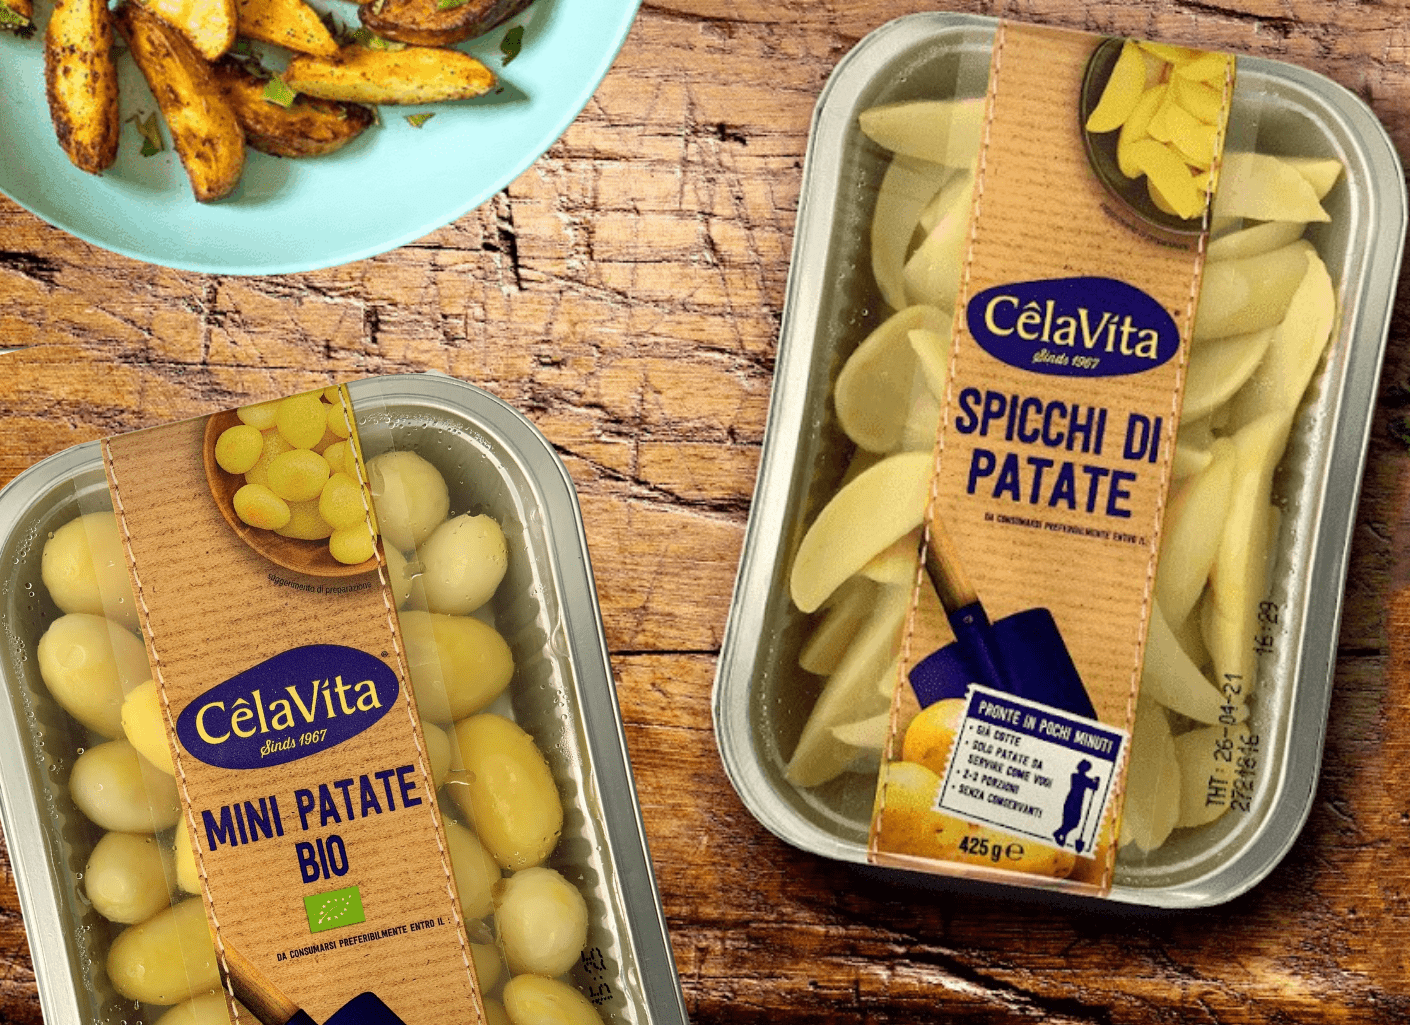 Macfrut: Romagnoli F.lli and McCain present the new CêlaVíta ready-to-eat potatoes